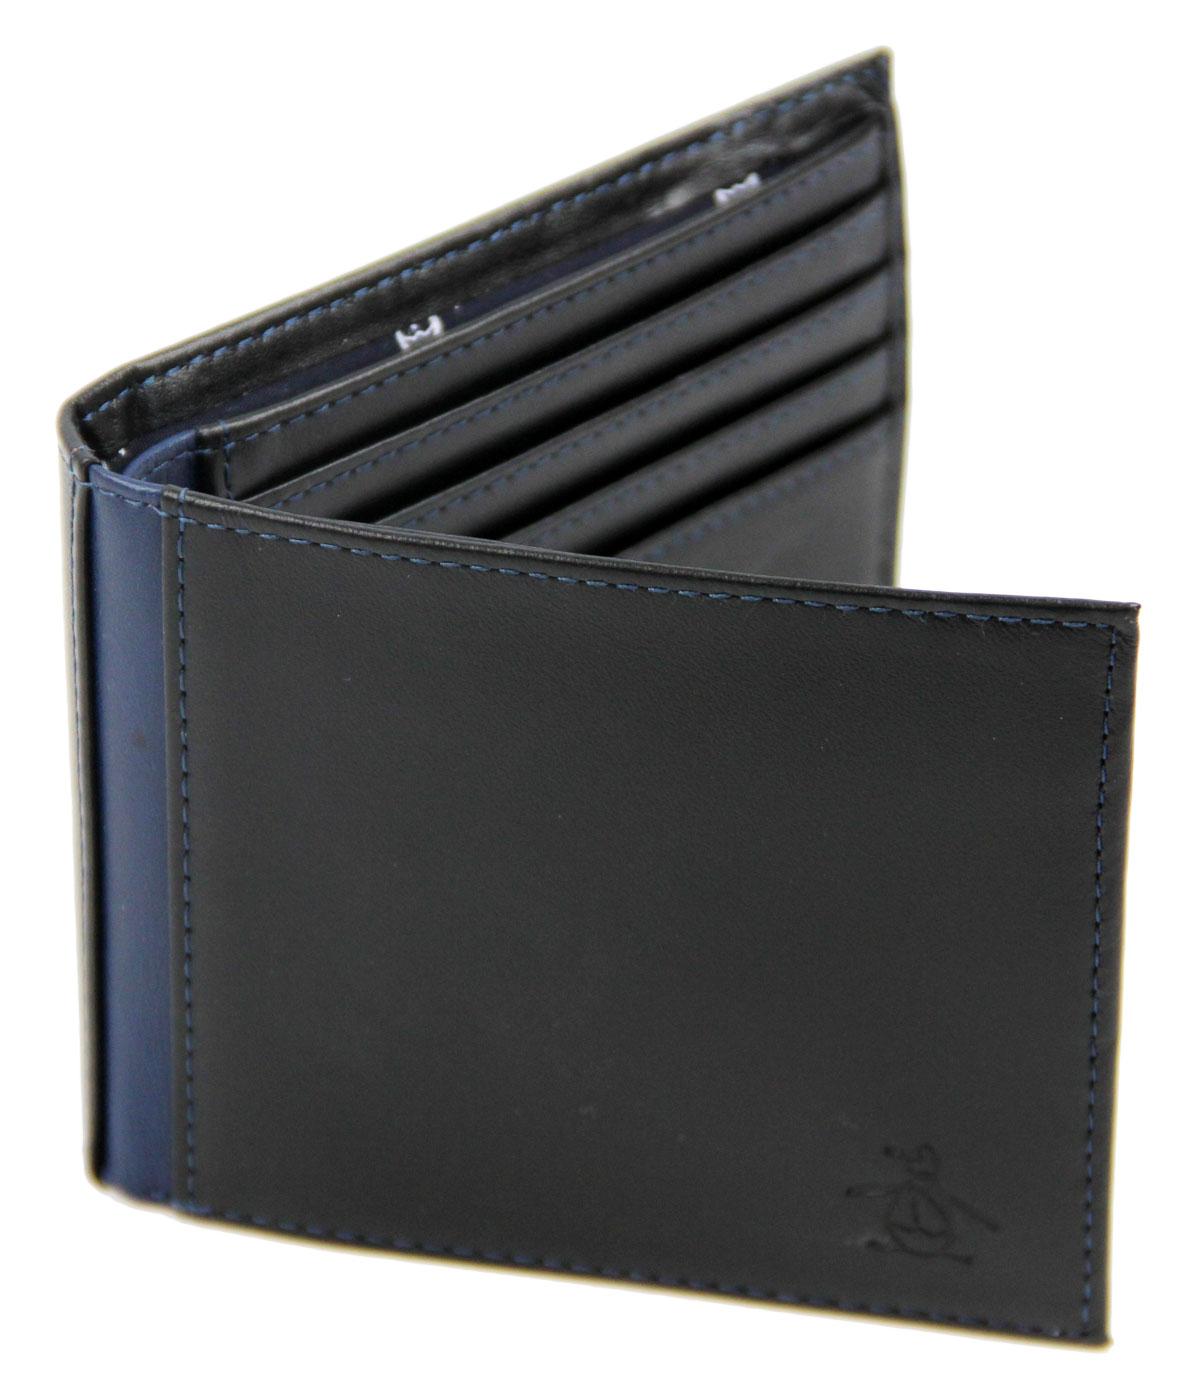 ORIGINAL PENGUIN Retro Mod Card Insert Wallet in Black